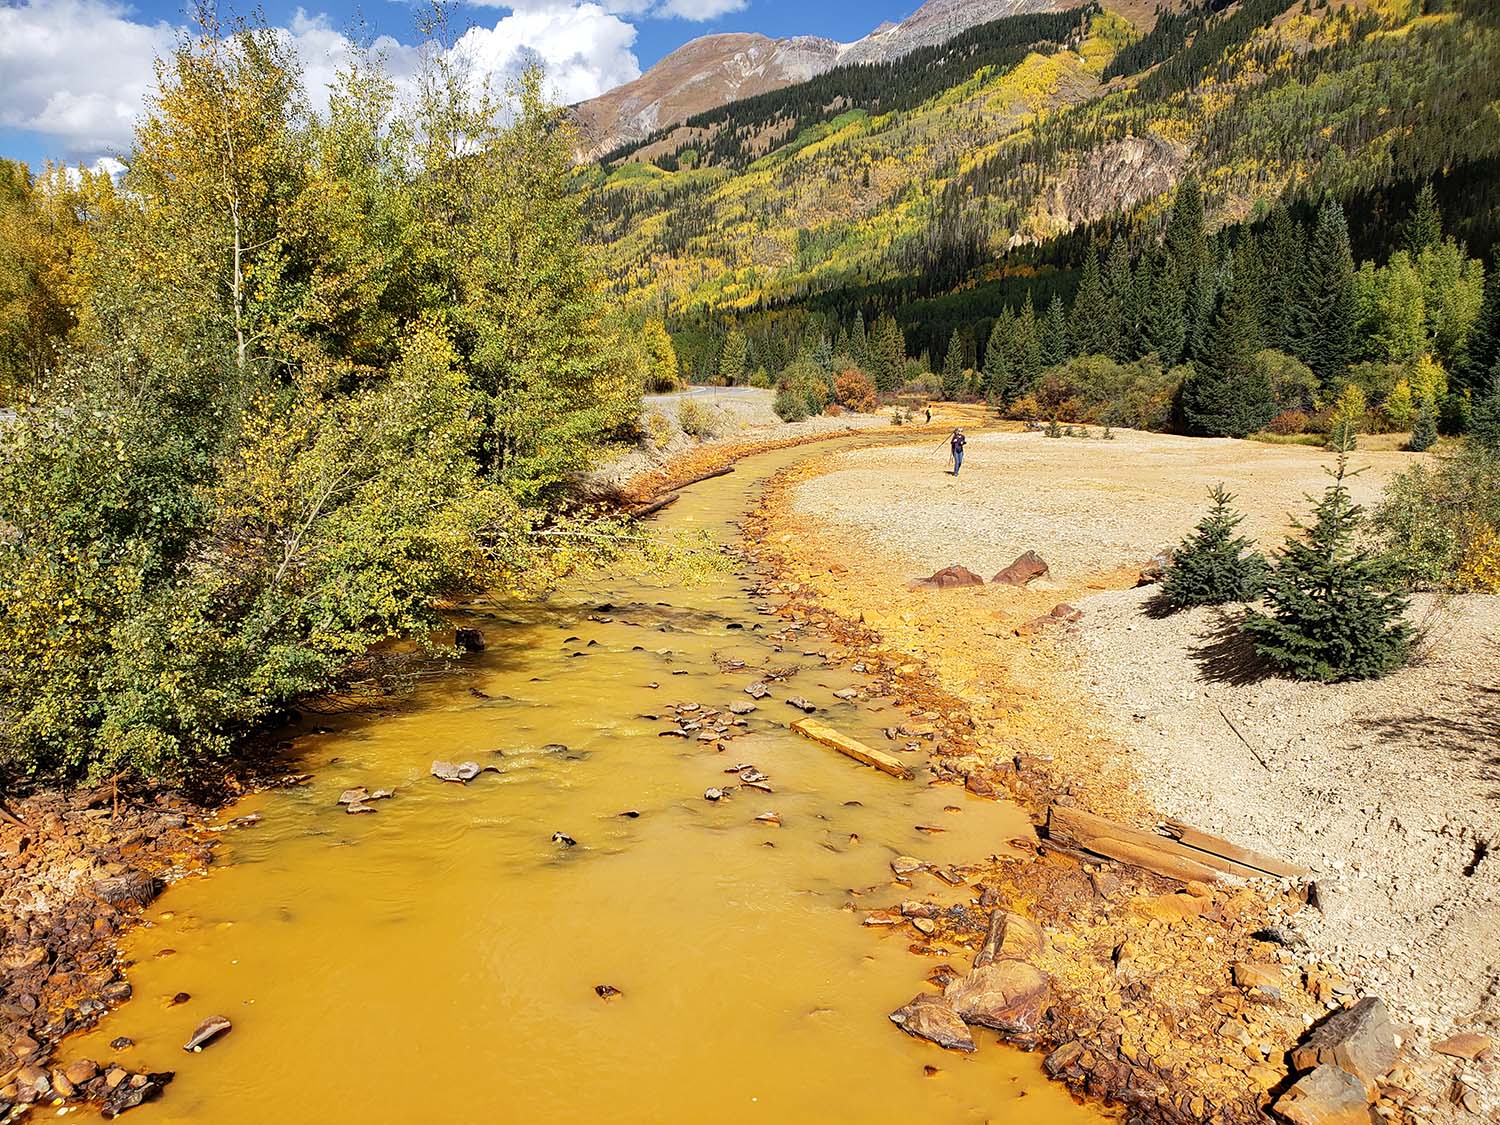 20190927_152837 Red Mountain Creek mining pollution.jpg